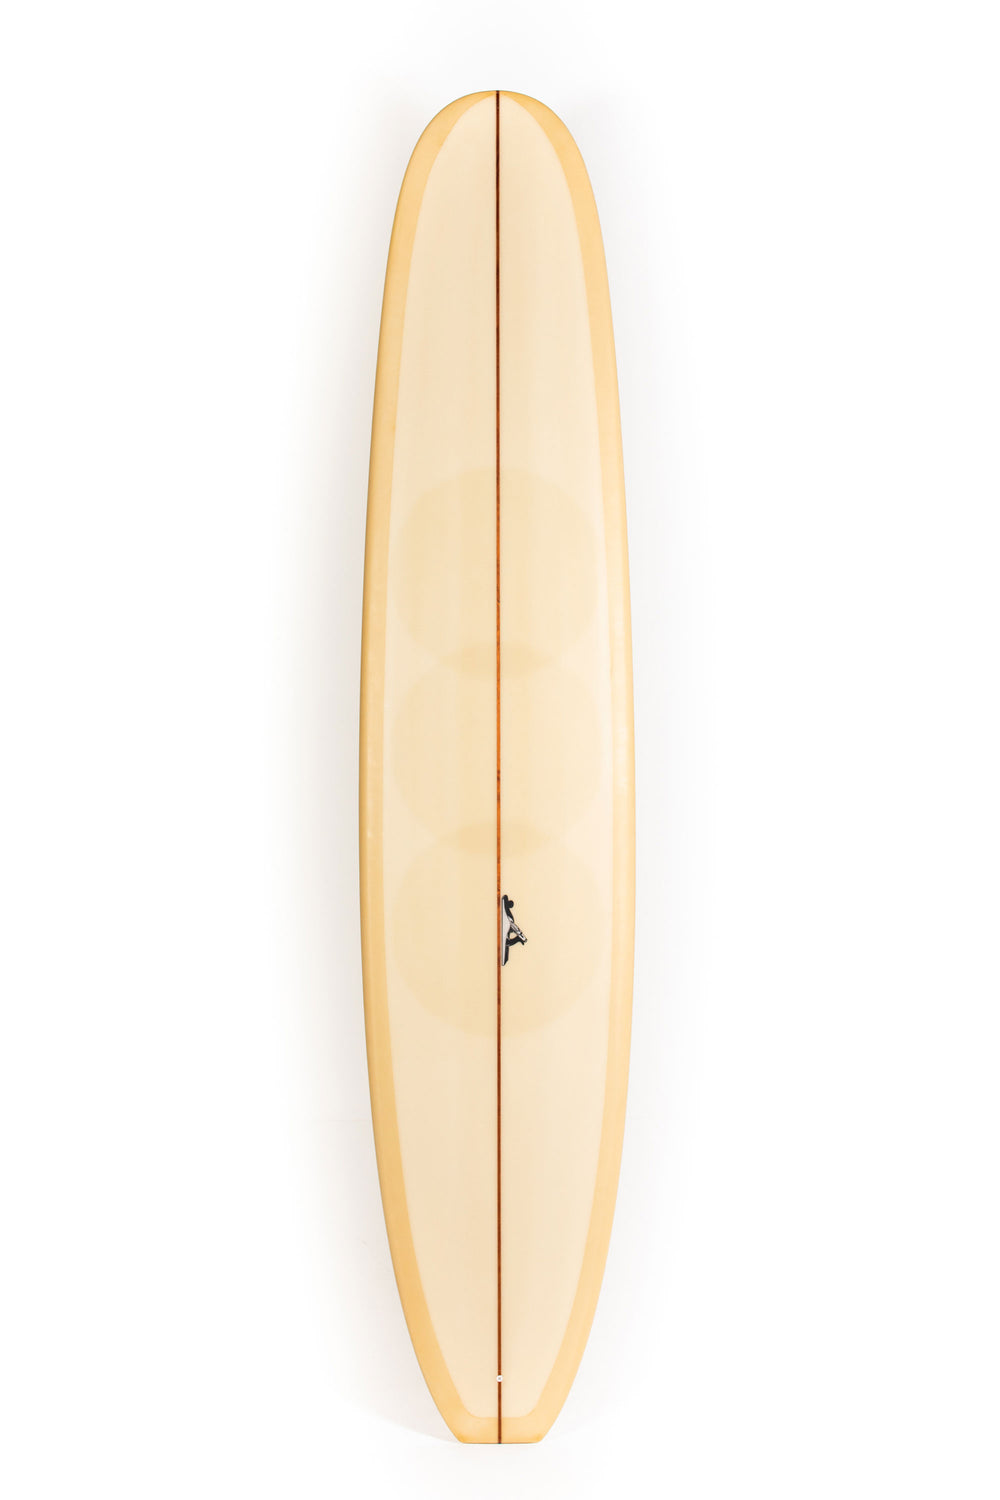 Pukas Surf Shop - Thomas Surfboards - KEEPER - 9'4